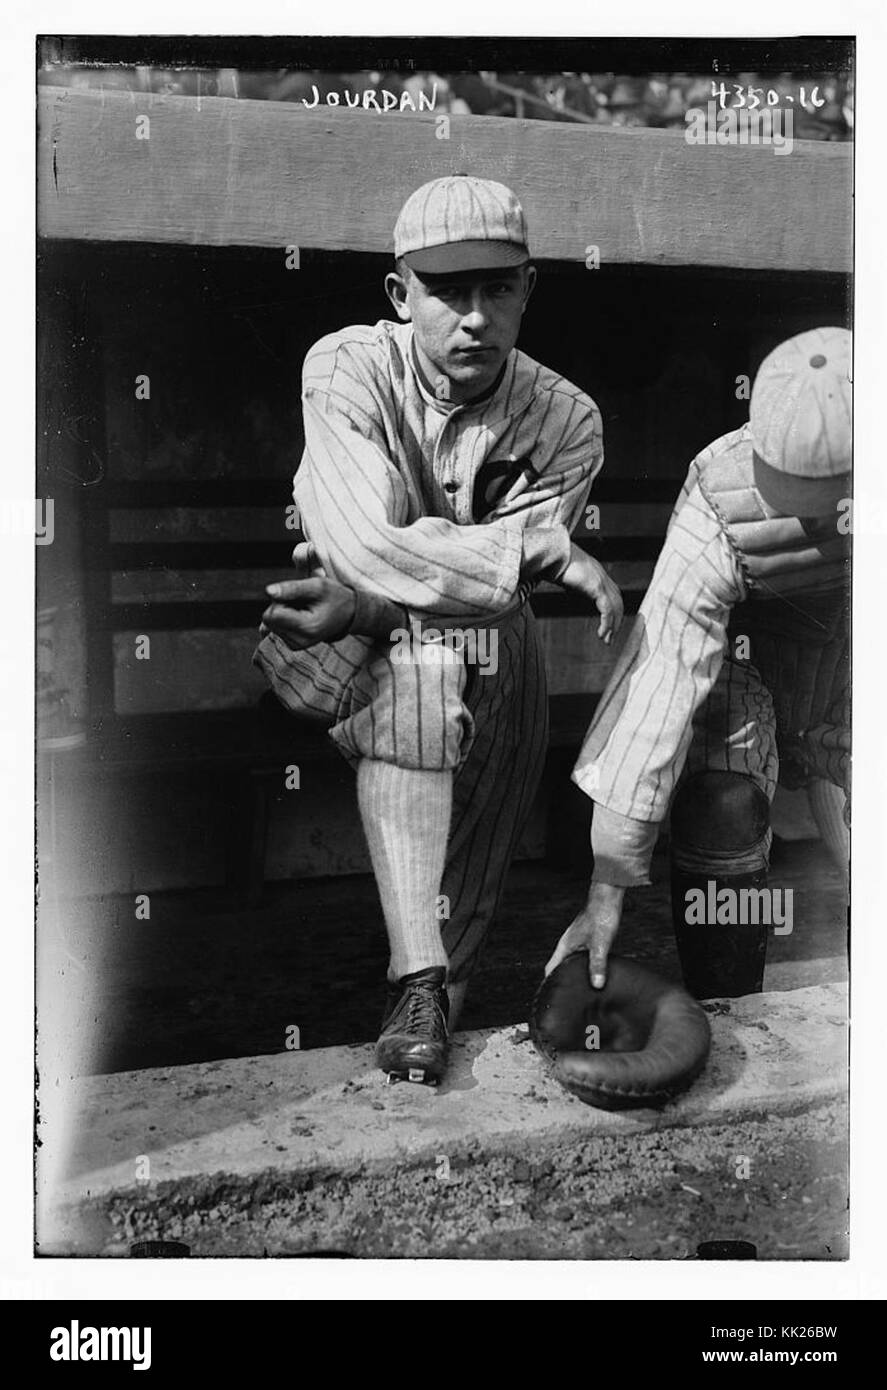 (Ted Jourdan, Chicago AL (baseball)) (LOC) (22646663250) Banque D'Images